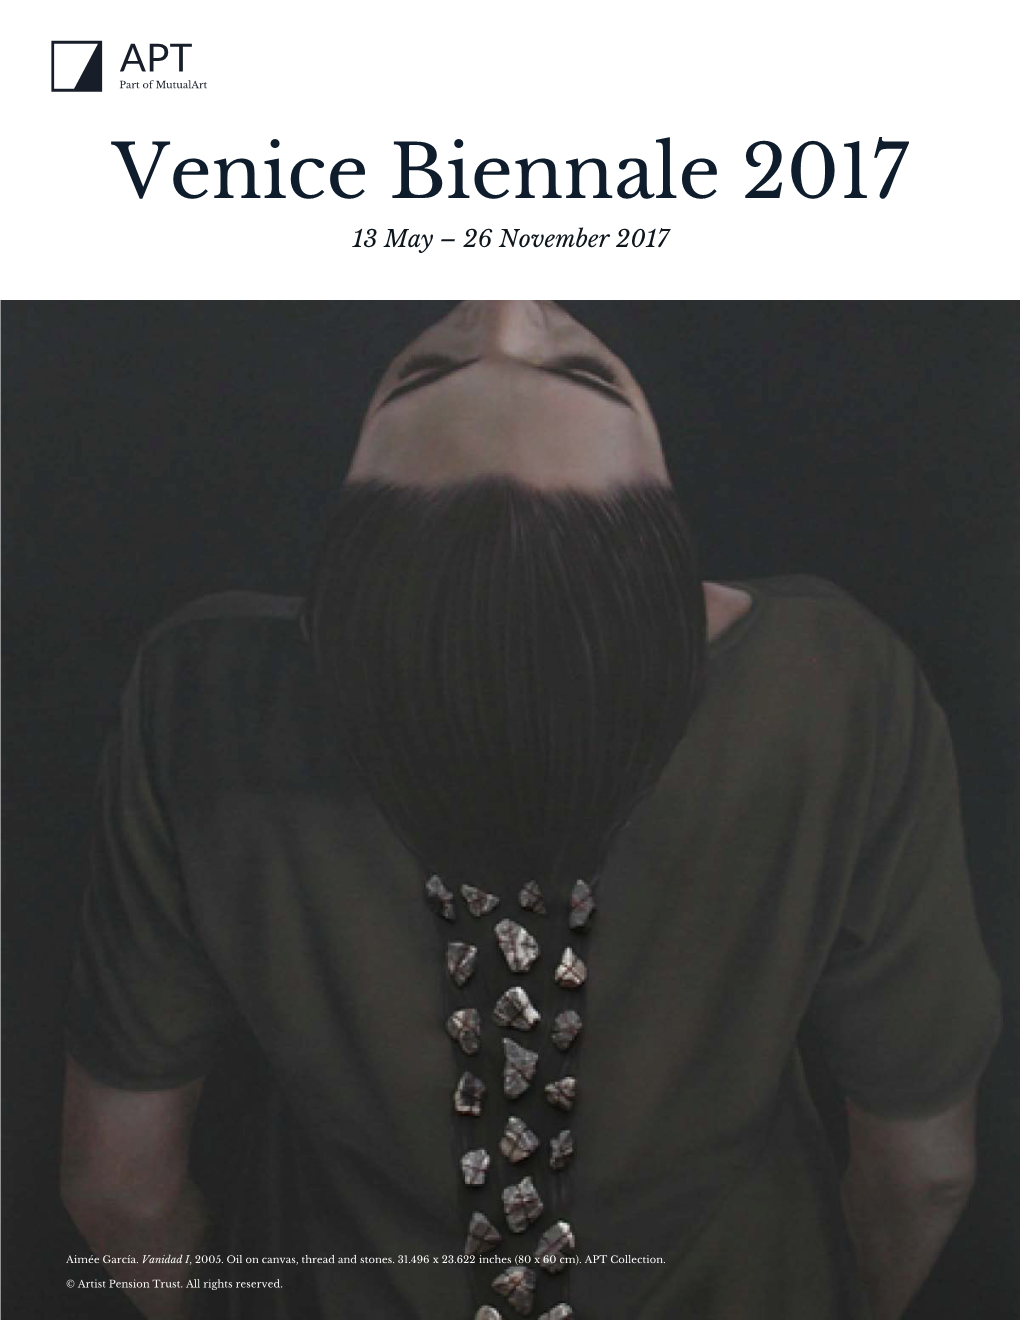 Venice Biennale 2017 13 May – 26 November 2017